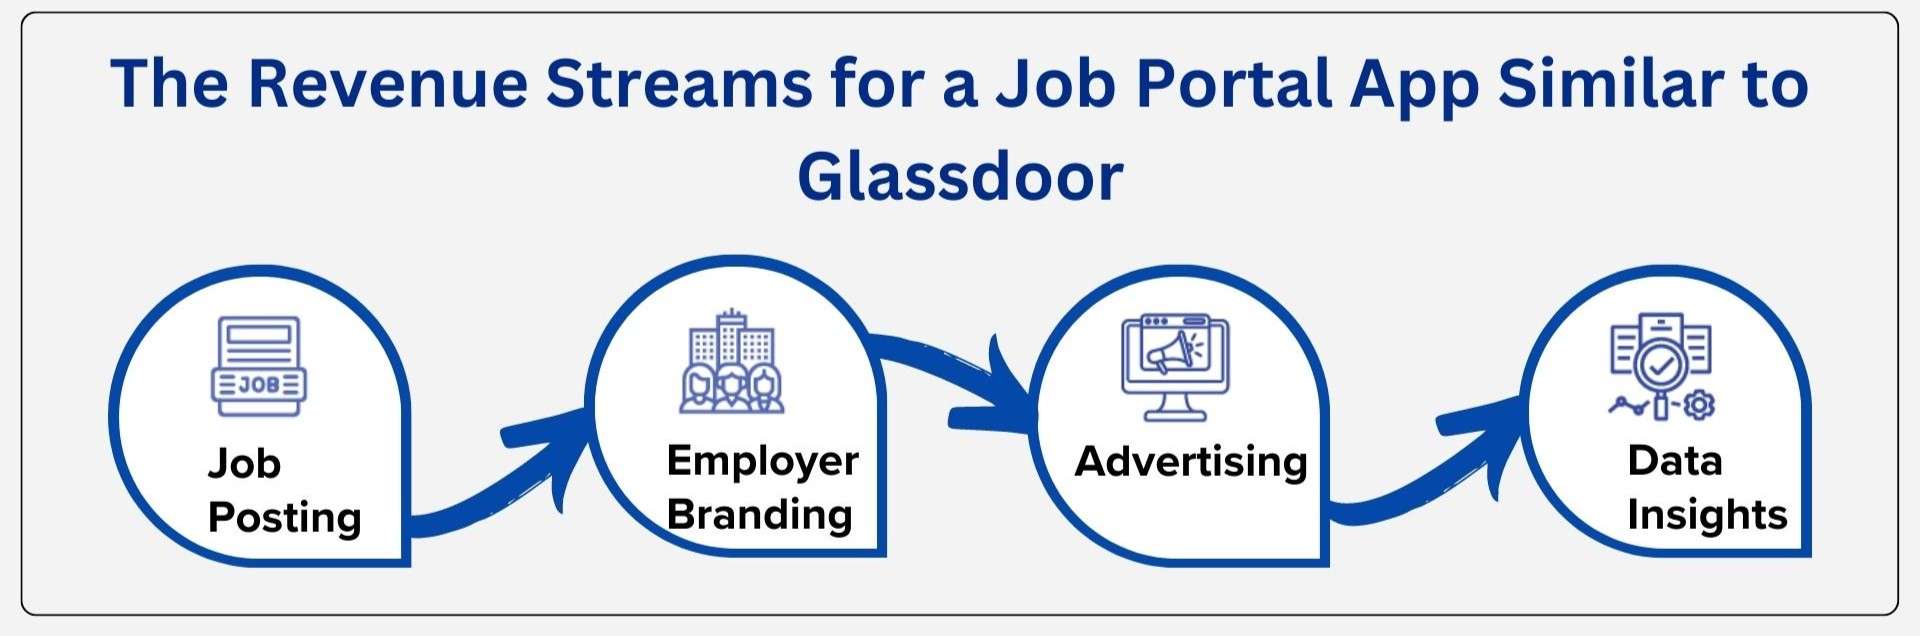 The Revenue Streams for a Job Portal App Similar to Glassdoor